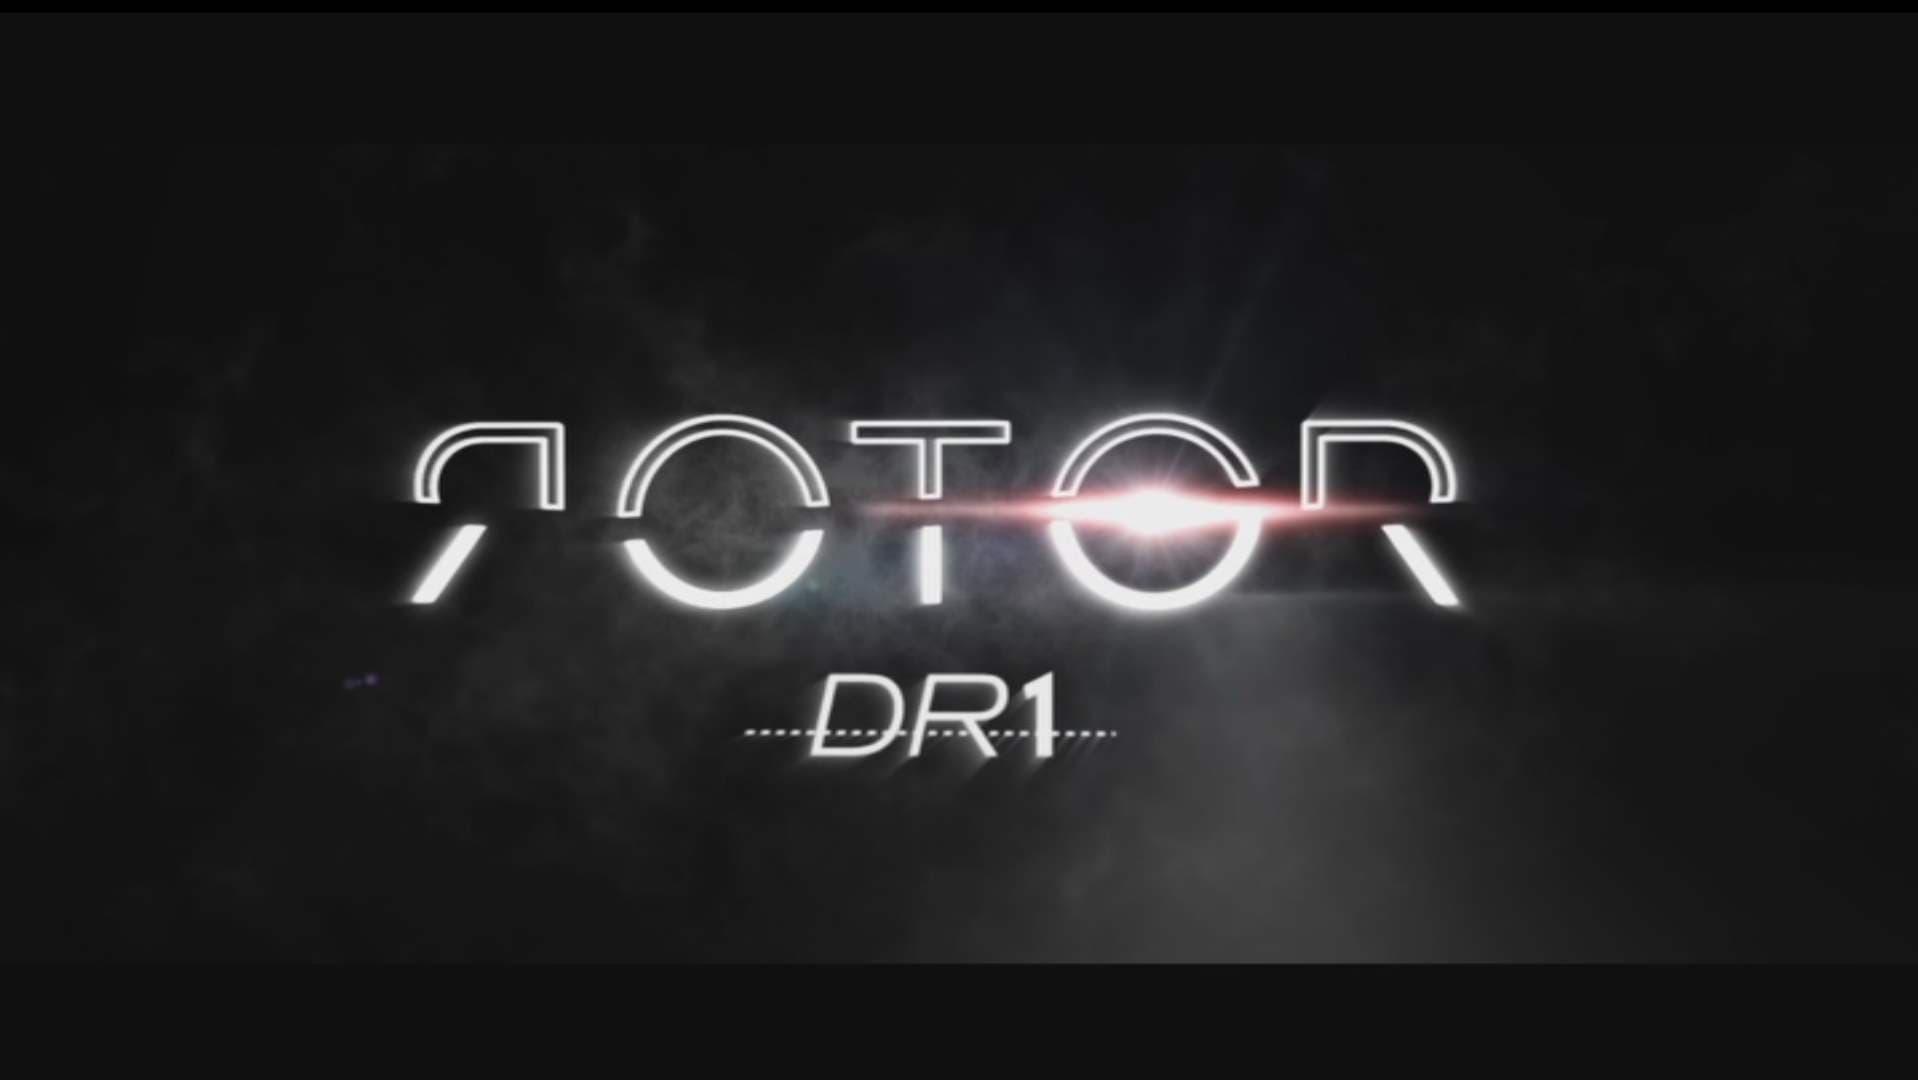 Rotor DR1 backdrop